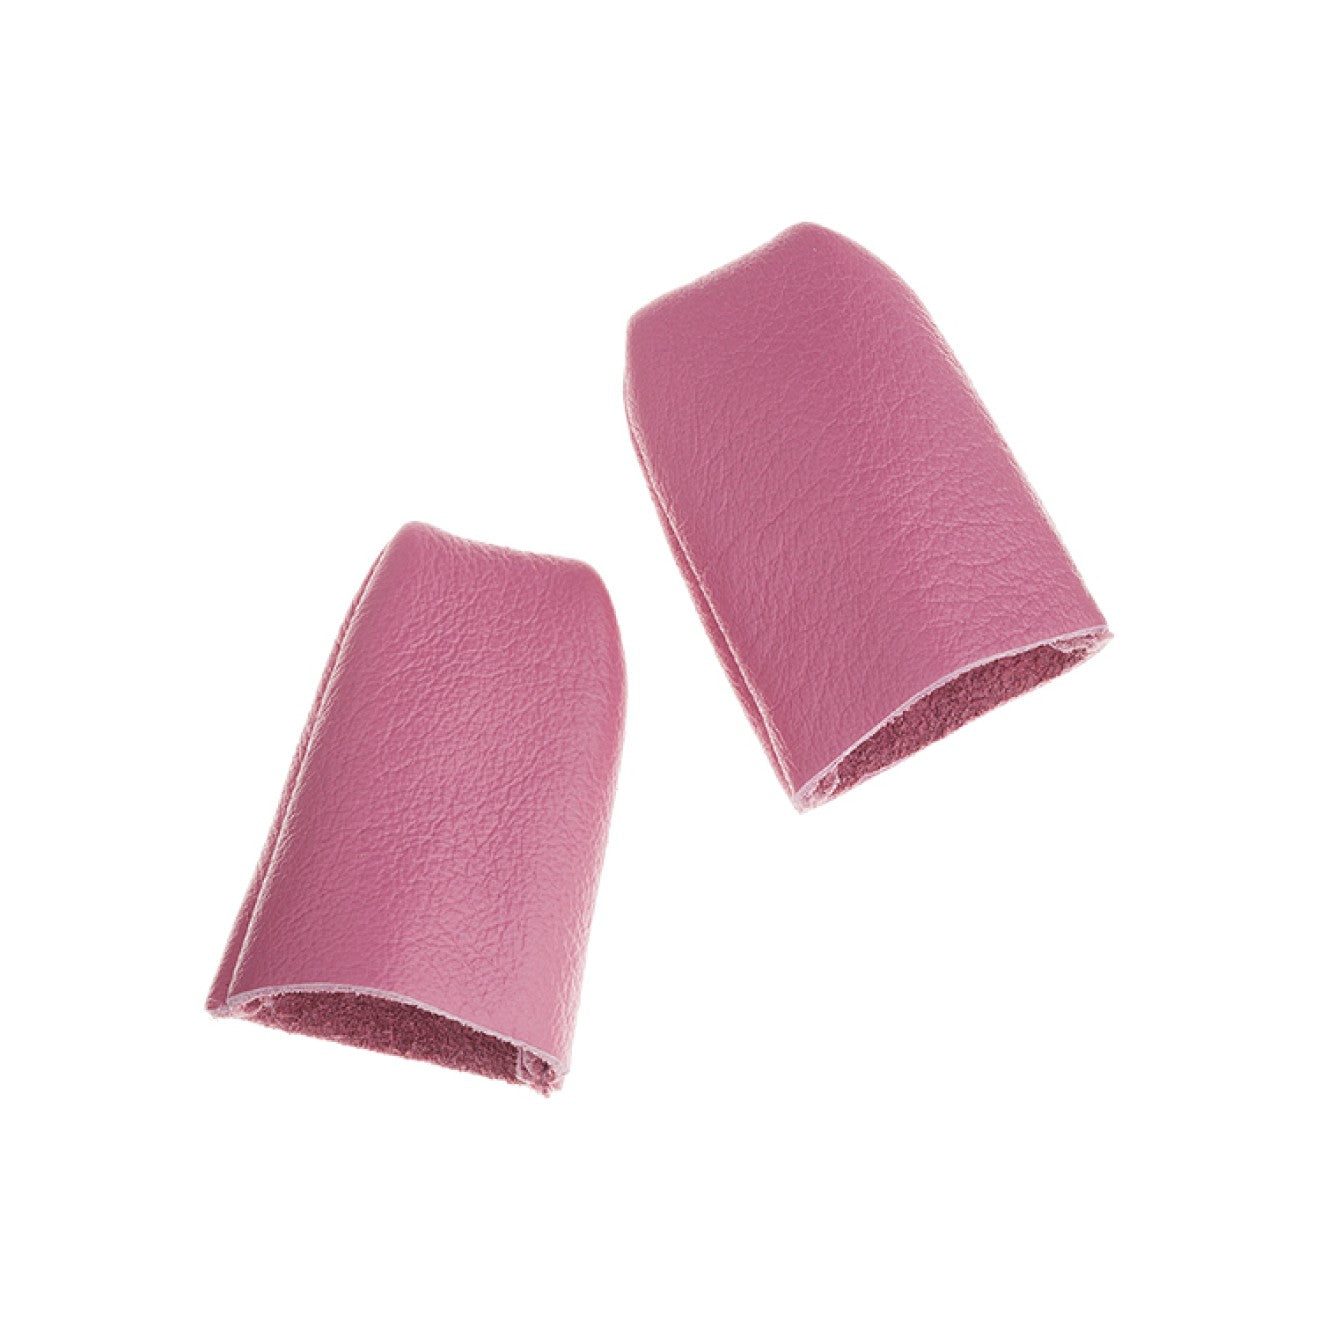 Tulip Fingerhüte Set rosa Leder 2 Stück